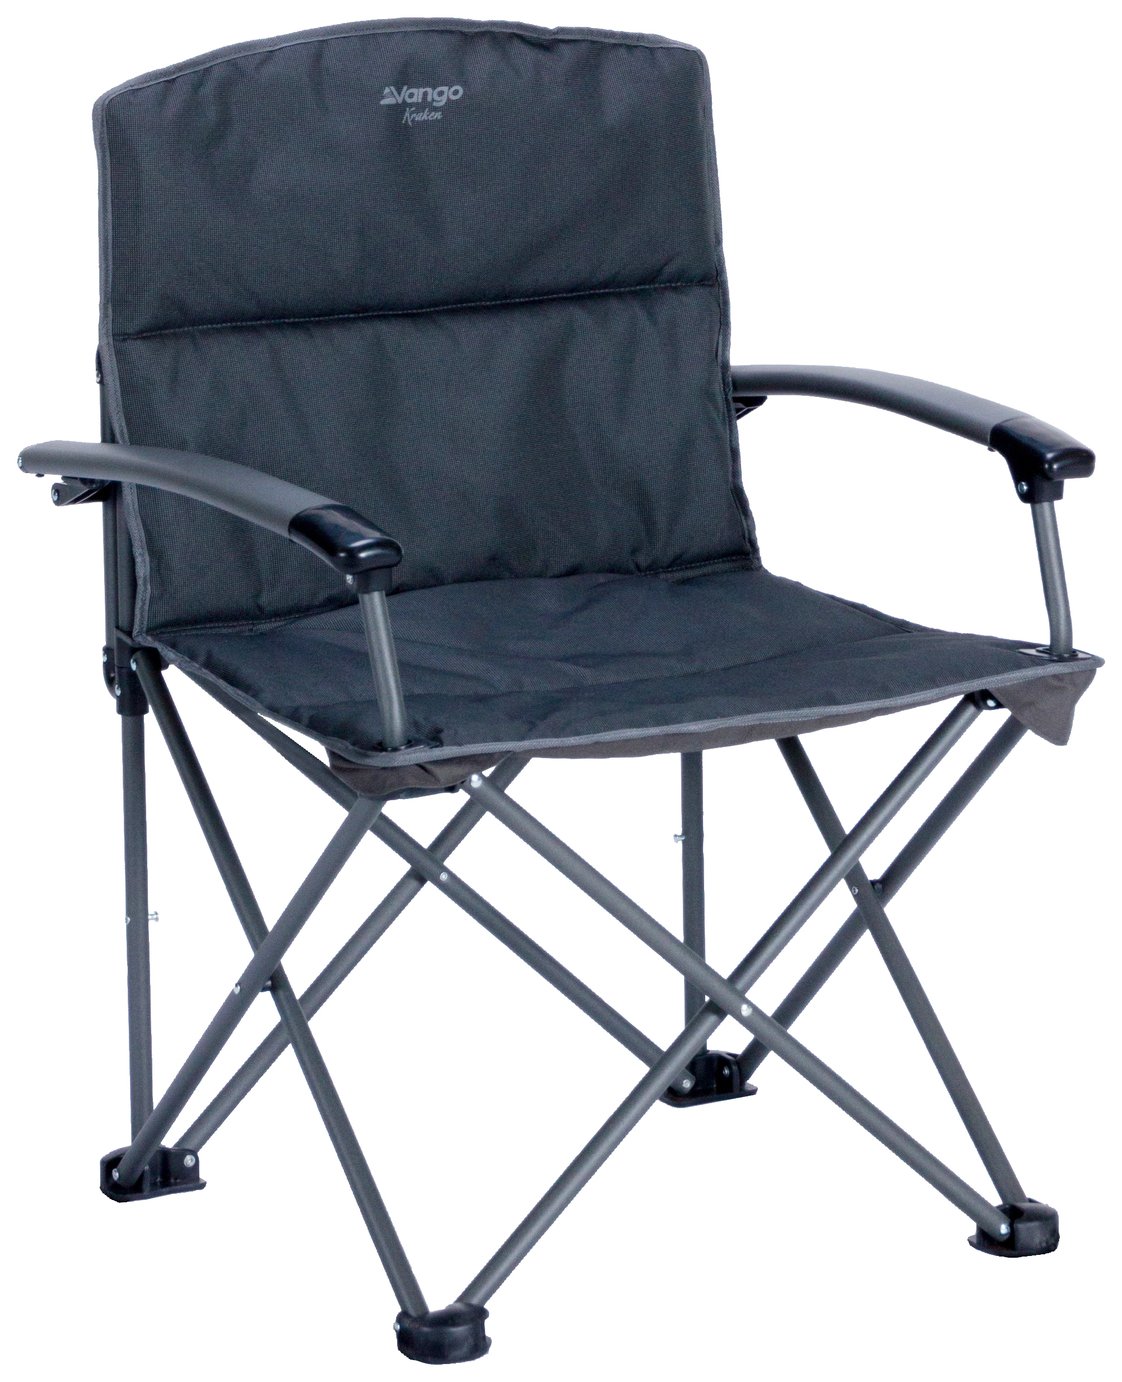 camping chairs argos ireland